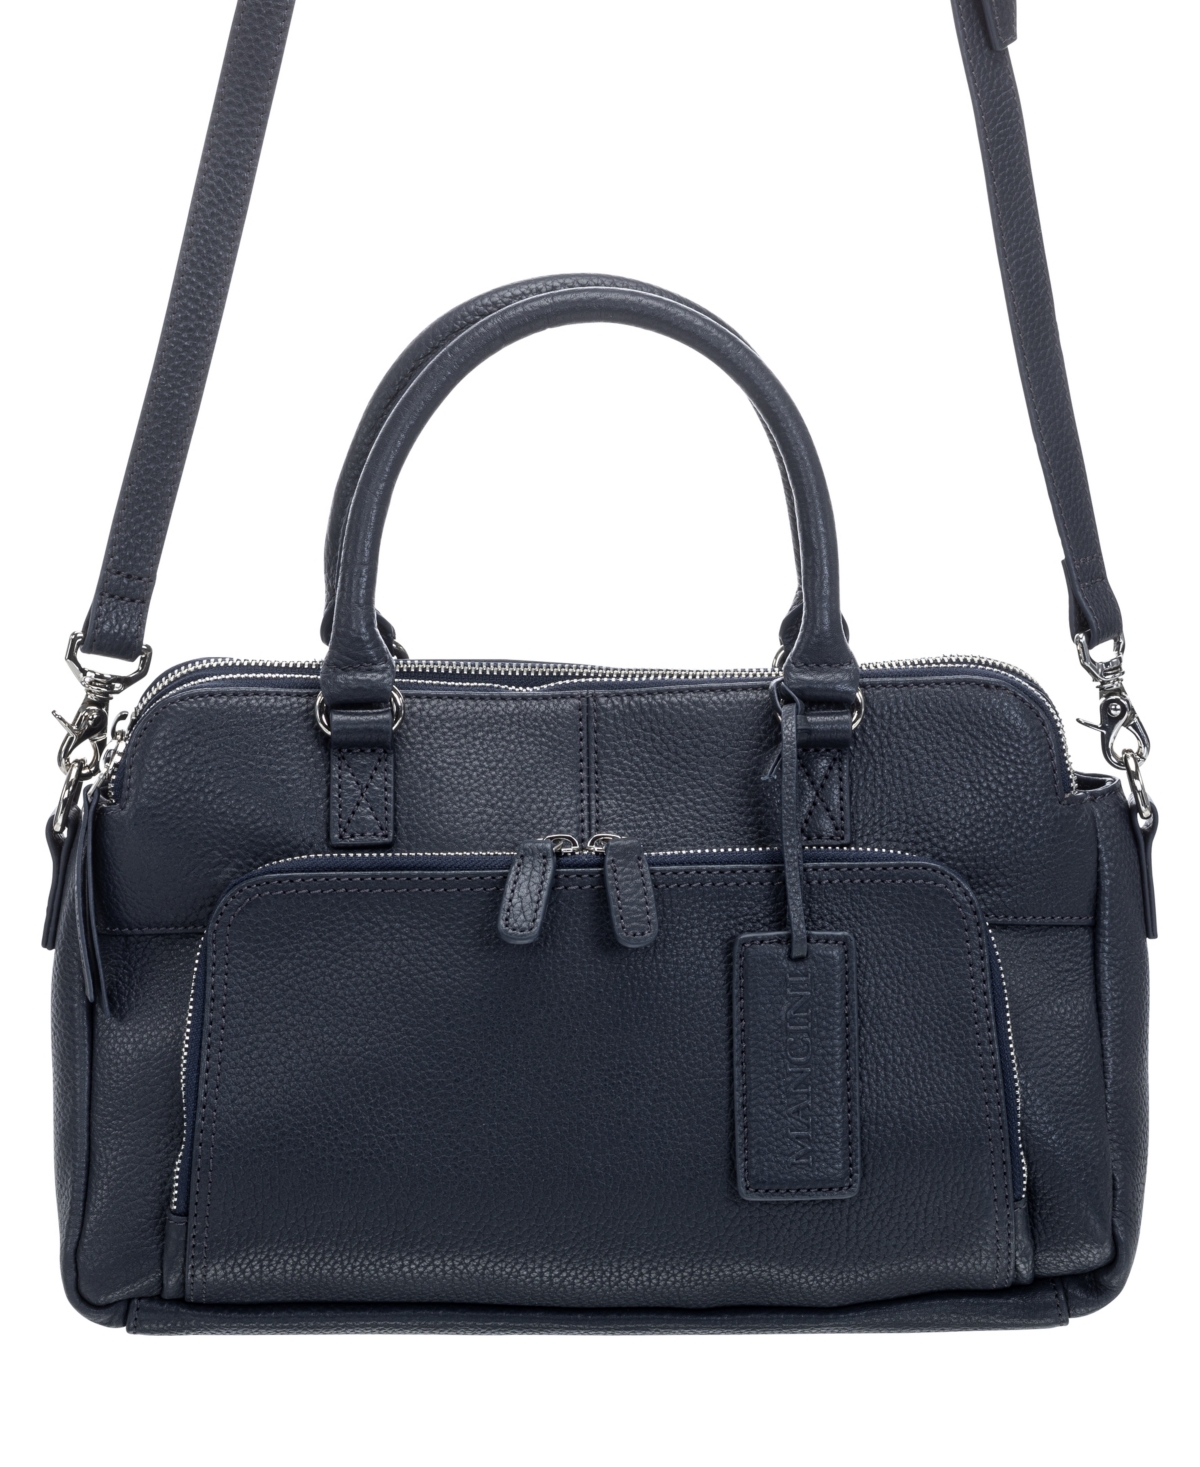 Mancini Women's Pebbled Jennifer Satchel Bag In Black